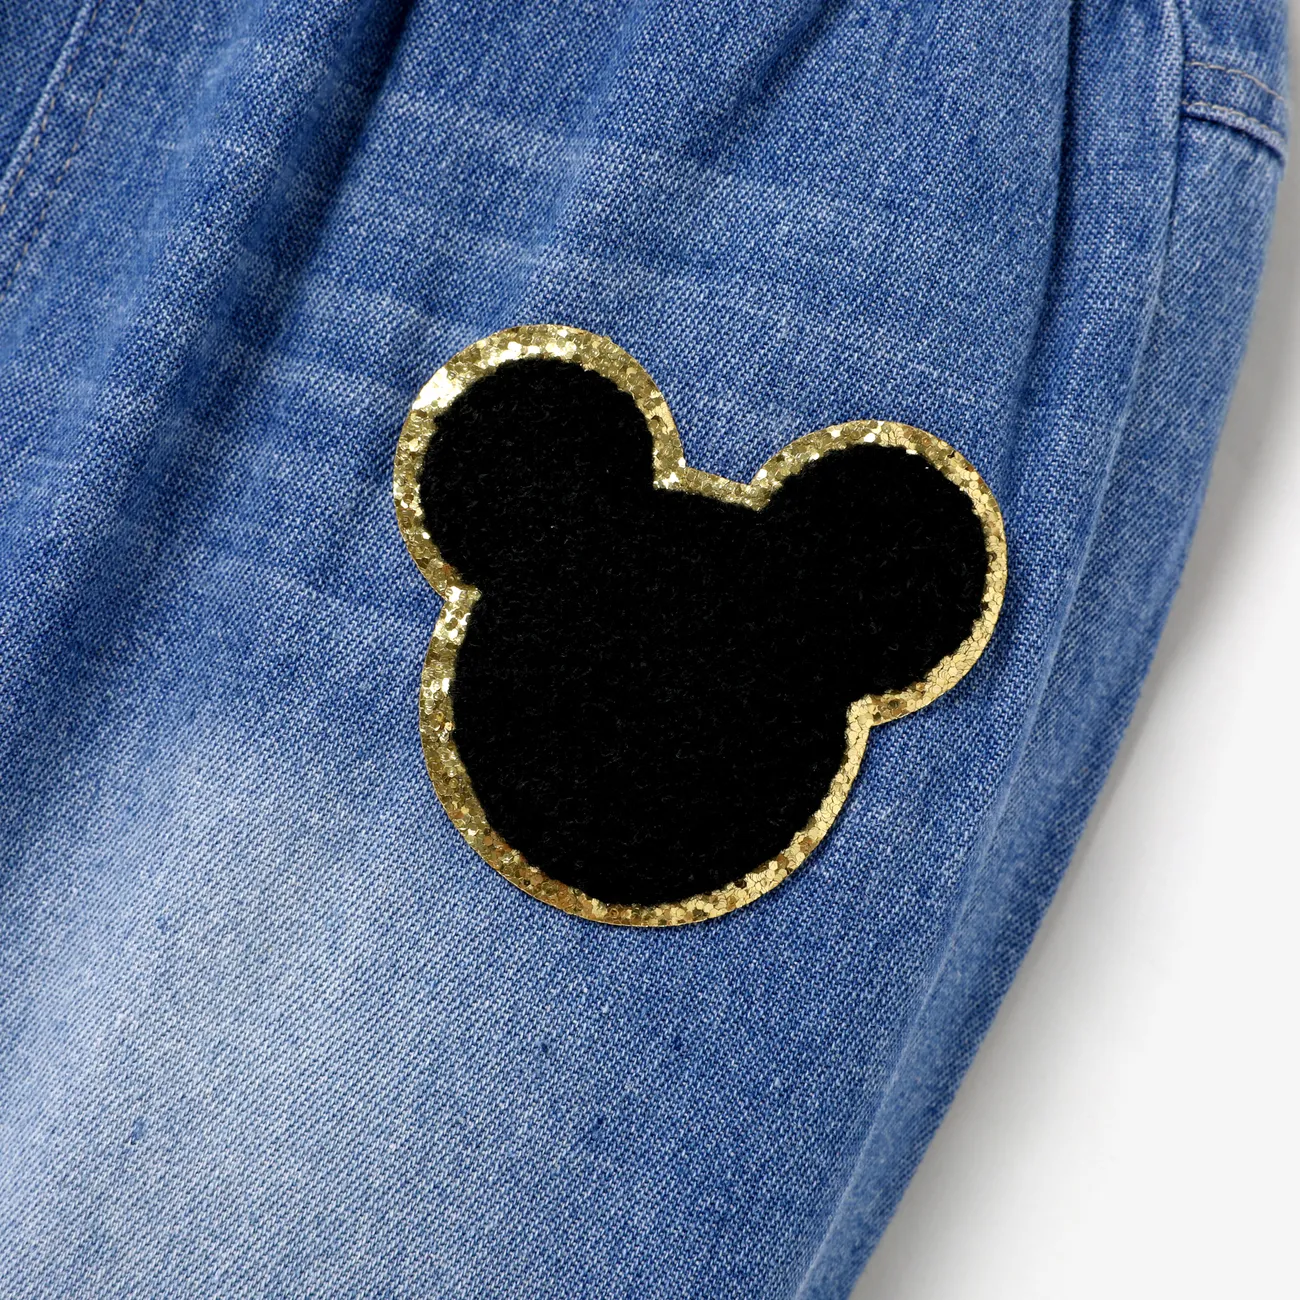 isney Mickey and Friends Toddler/Kid Boy Cotton Denim Jeans ou Disney Mickey e Minnie Character Pattern Print Crew Neck Sweatshirt azul denim big image 1